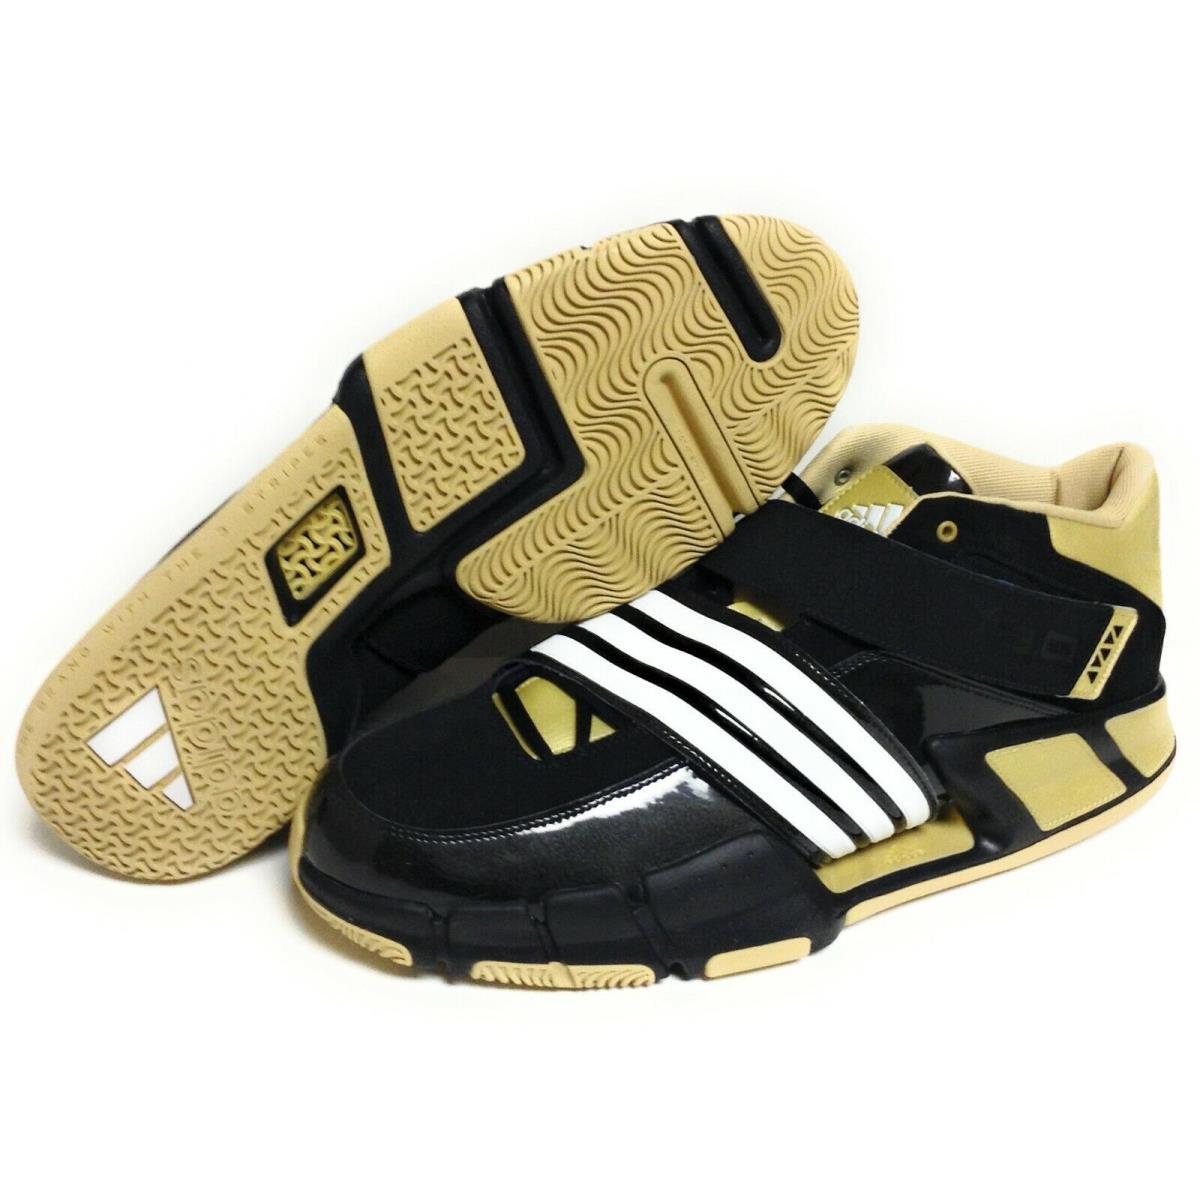 Mens Adidas Pilrahna Iii 170752 Black Sandstorm 2006 Basketball Sneakers Shoes - Black, Manufacturer: Black